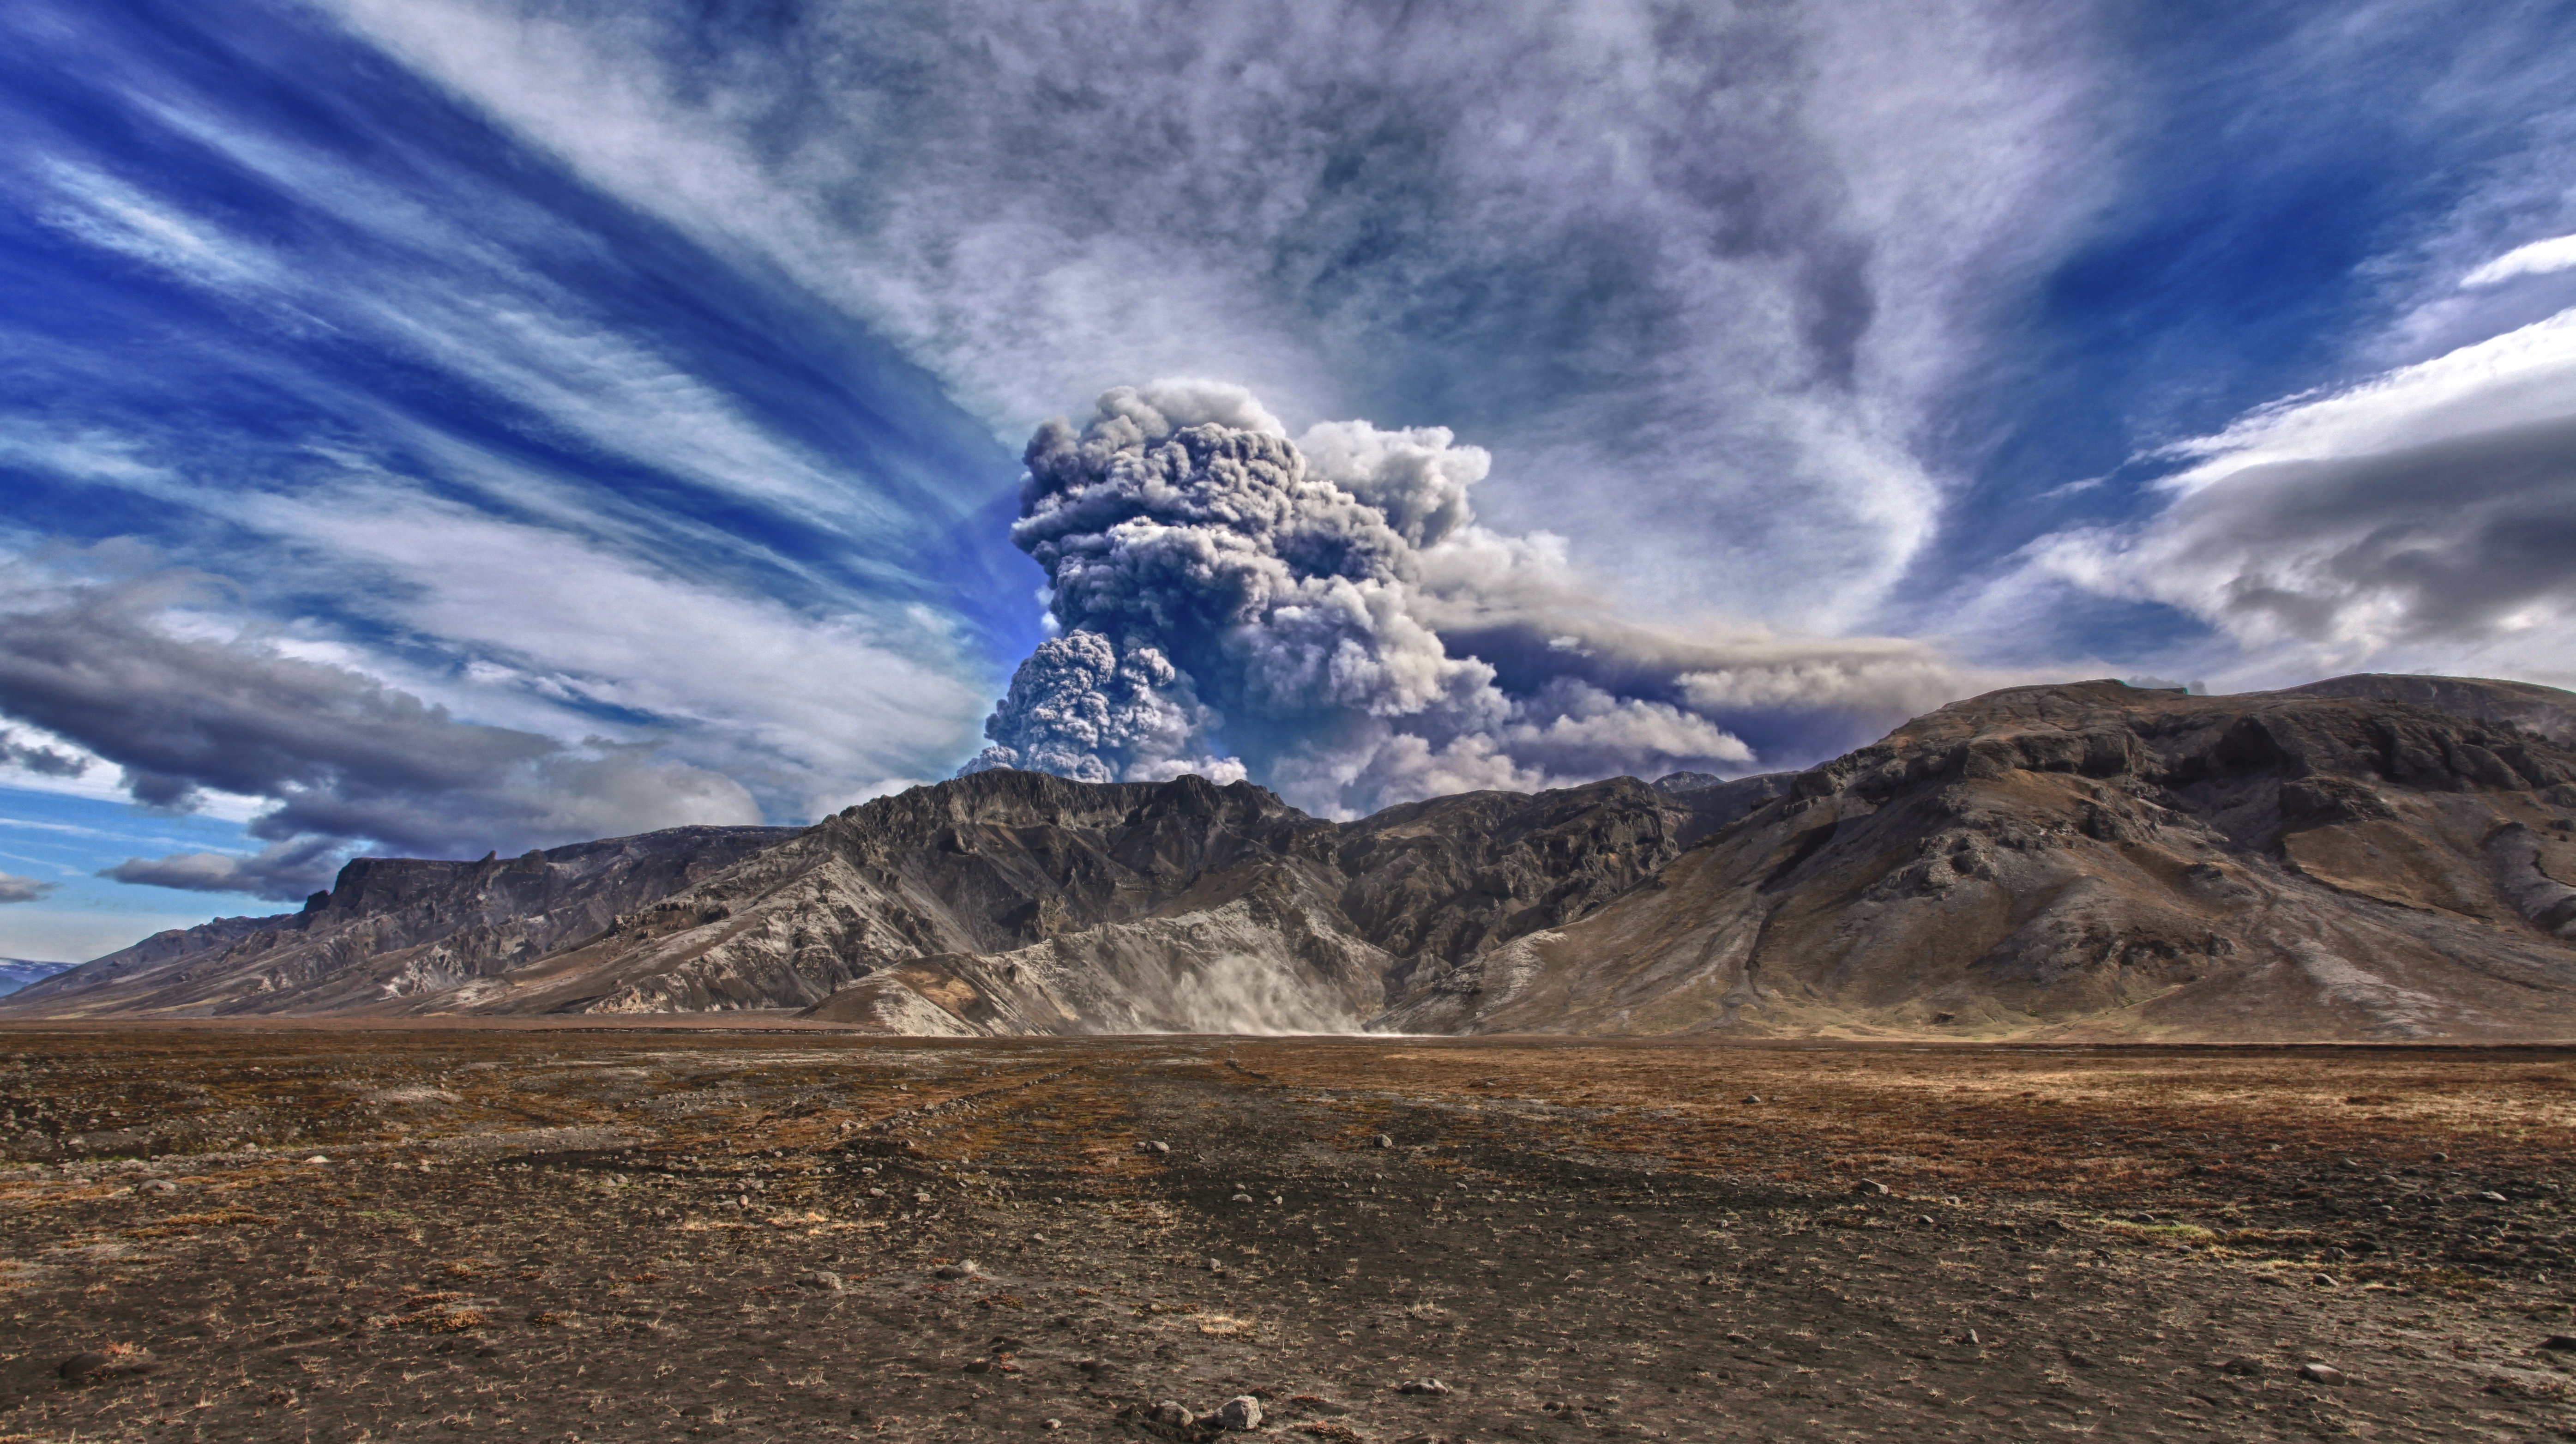 The eruption of Eyjafjallajokull